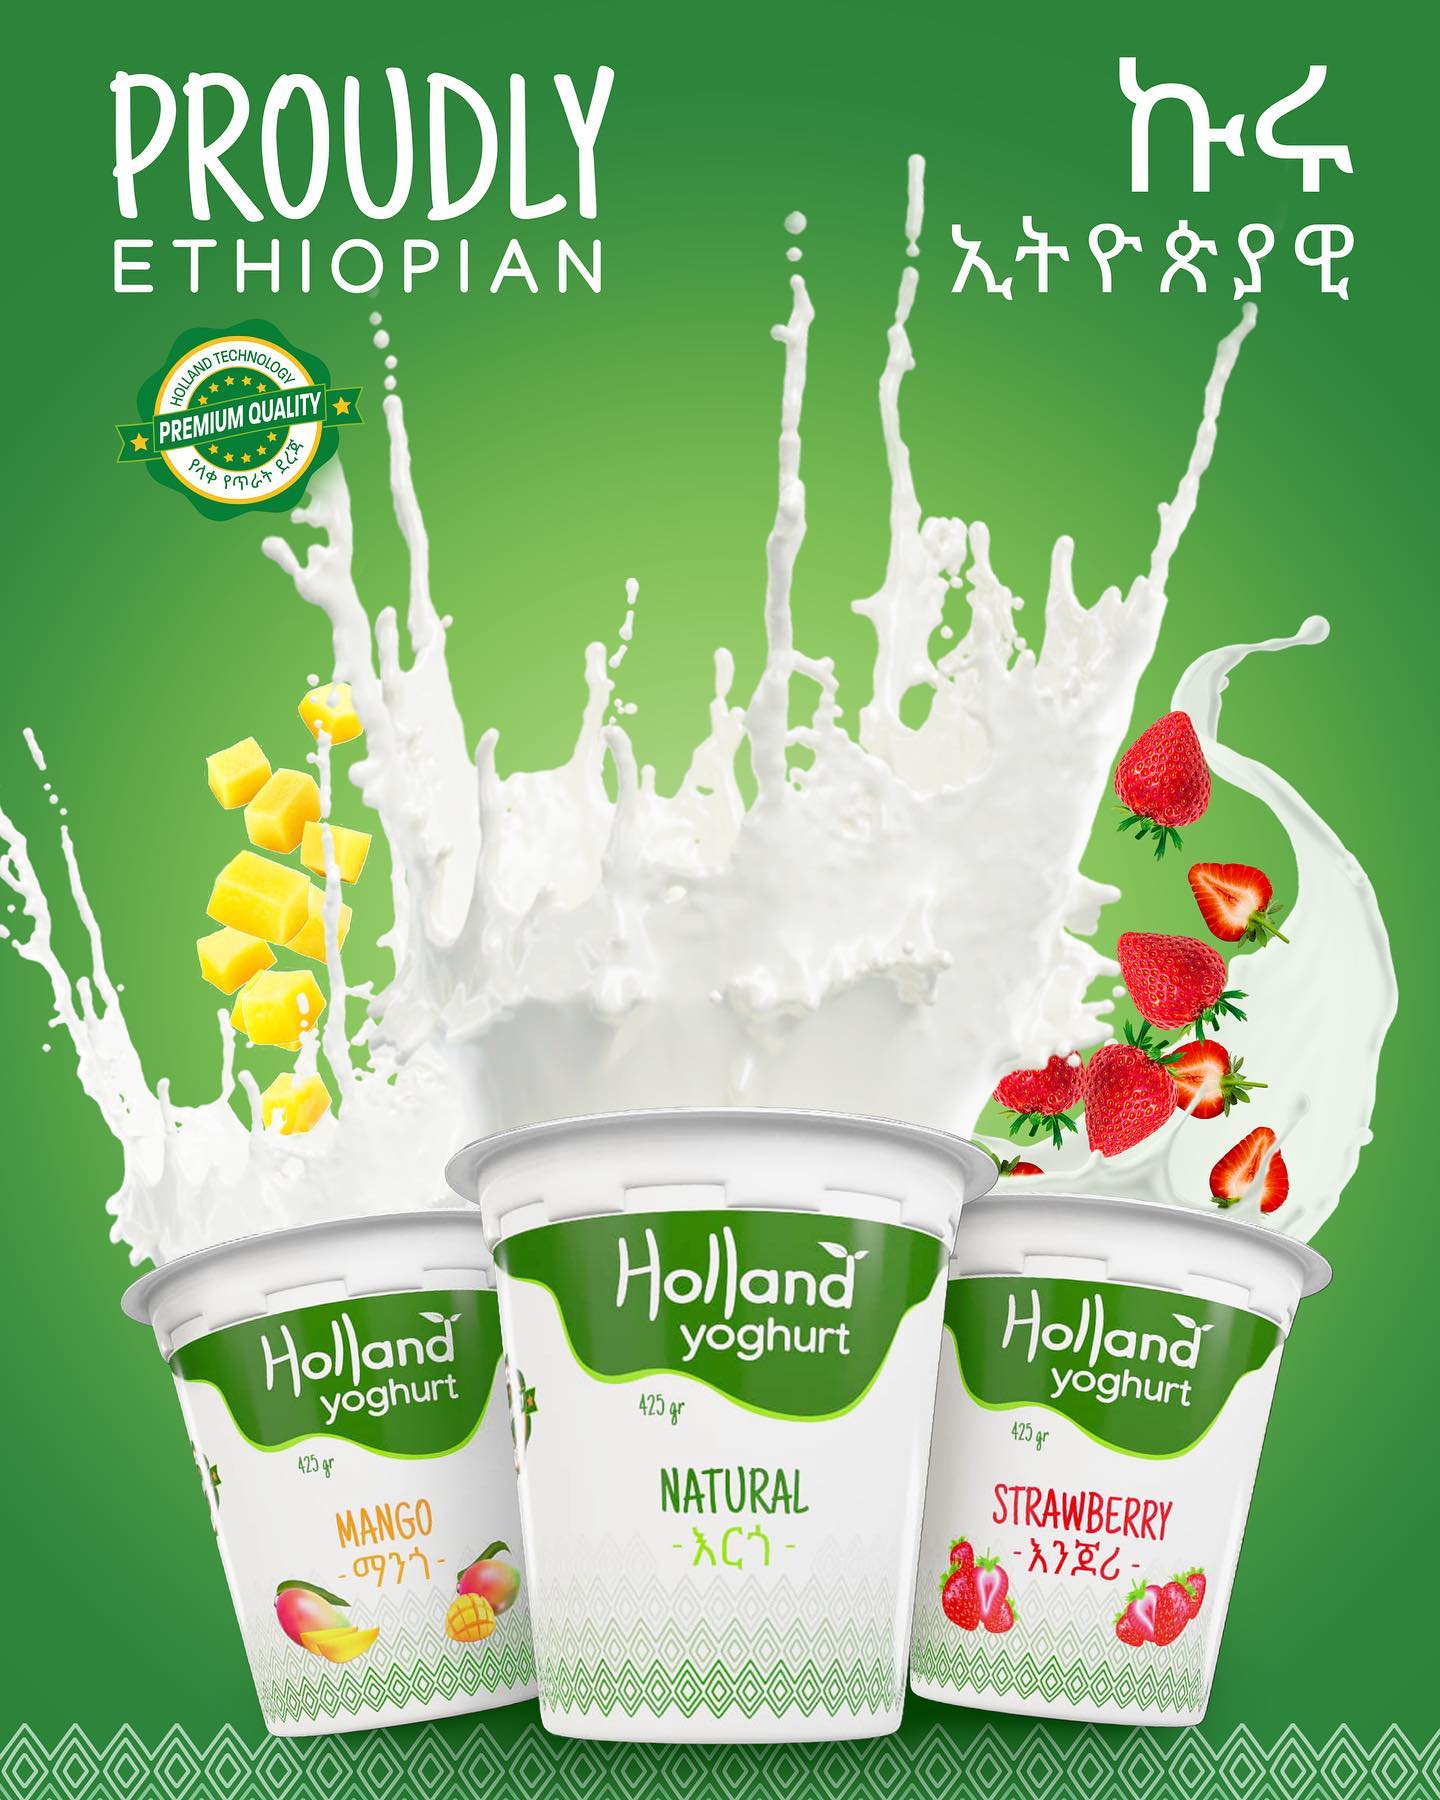 image for Holland Dairy rebranded